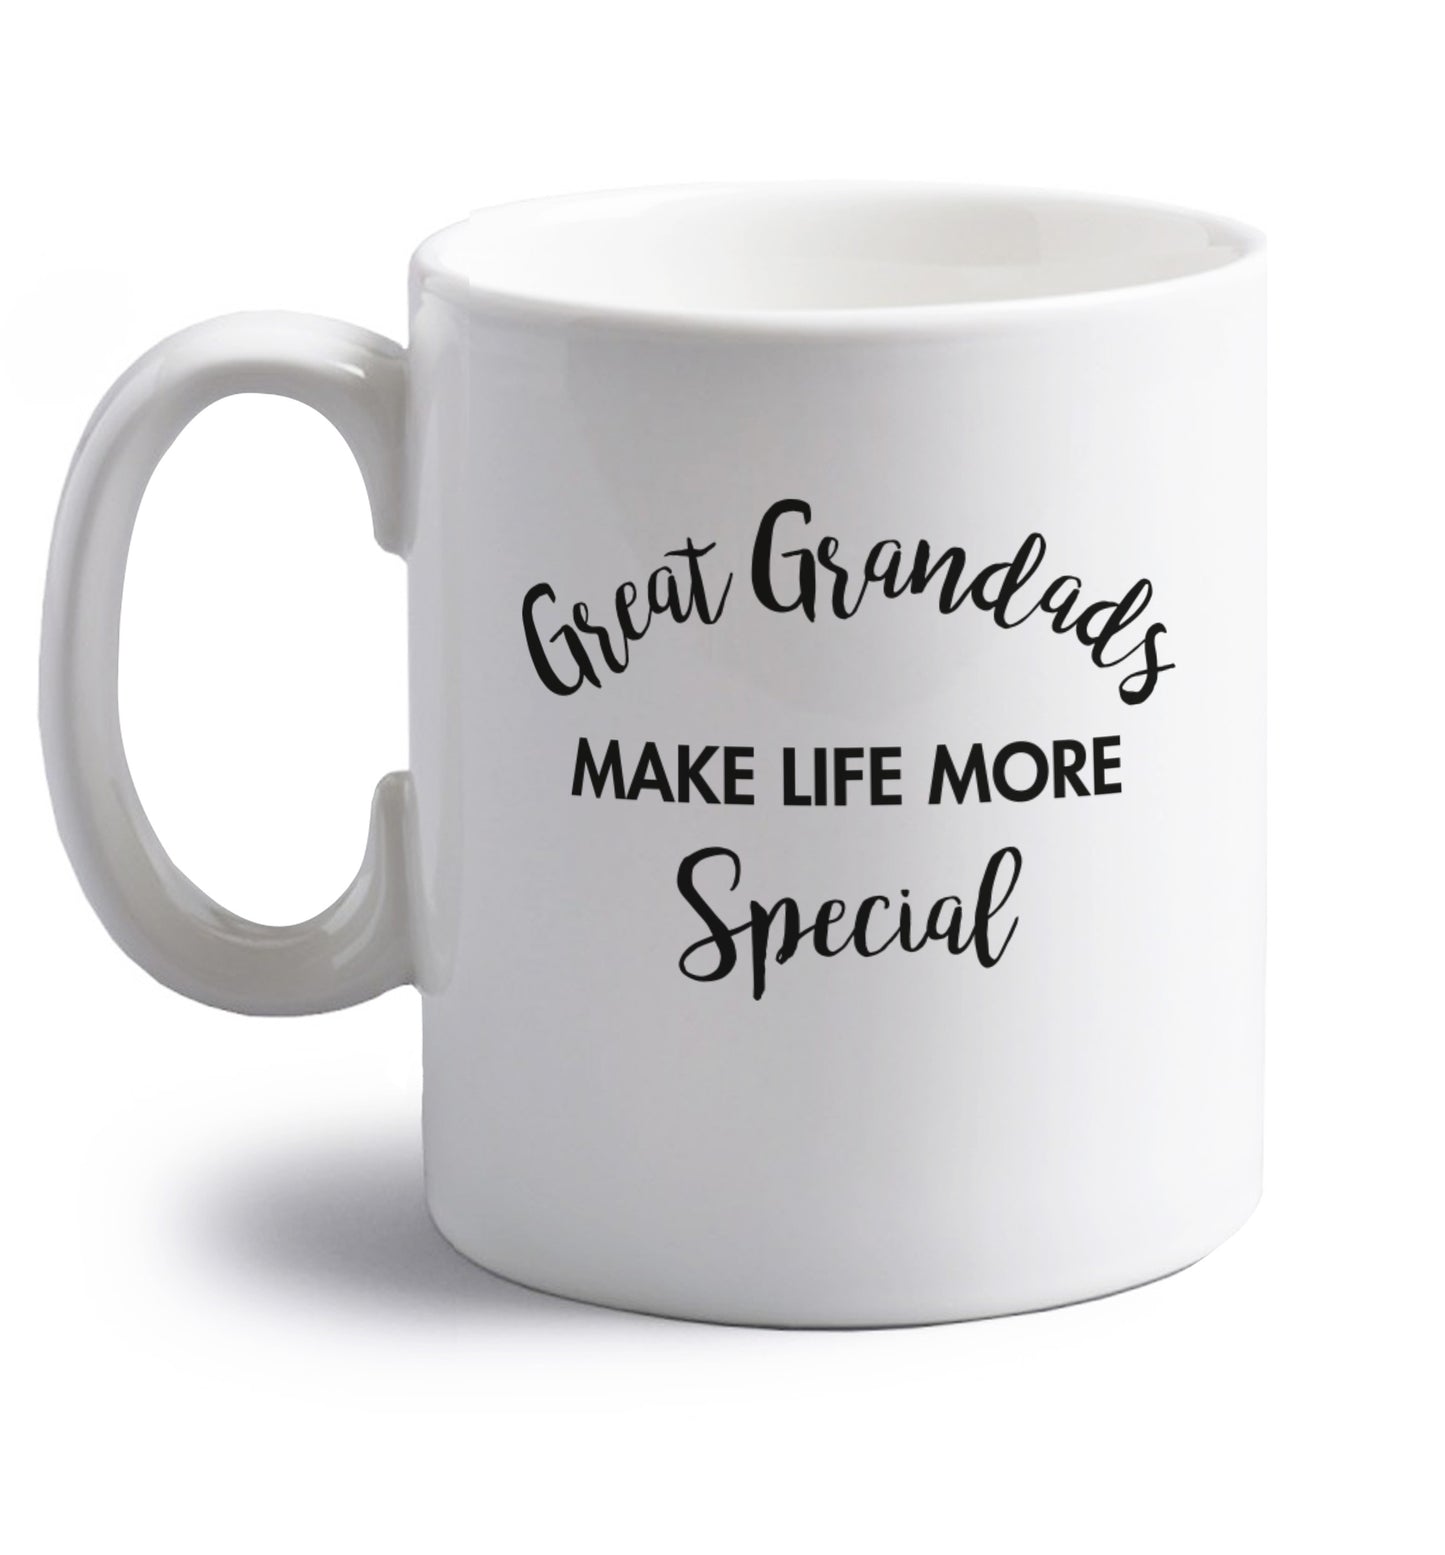 Great Grandads make life more special right handed white ceramic mug 